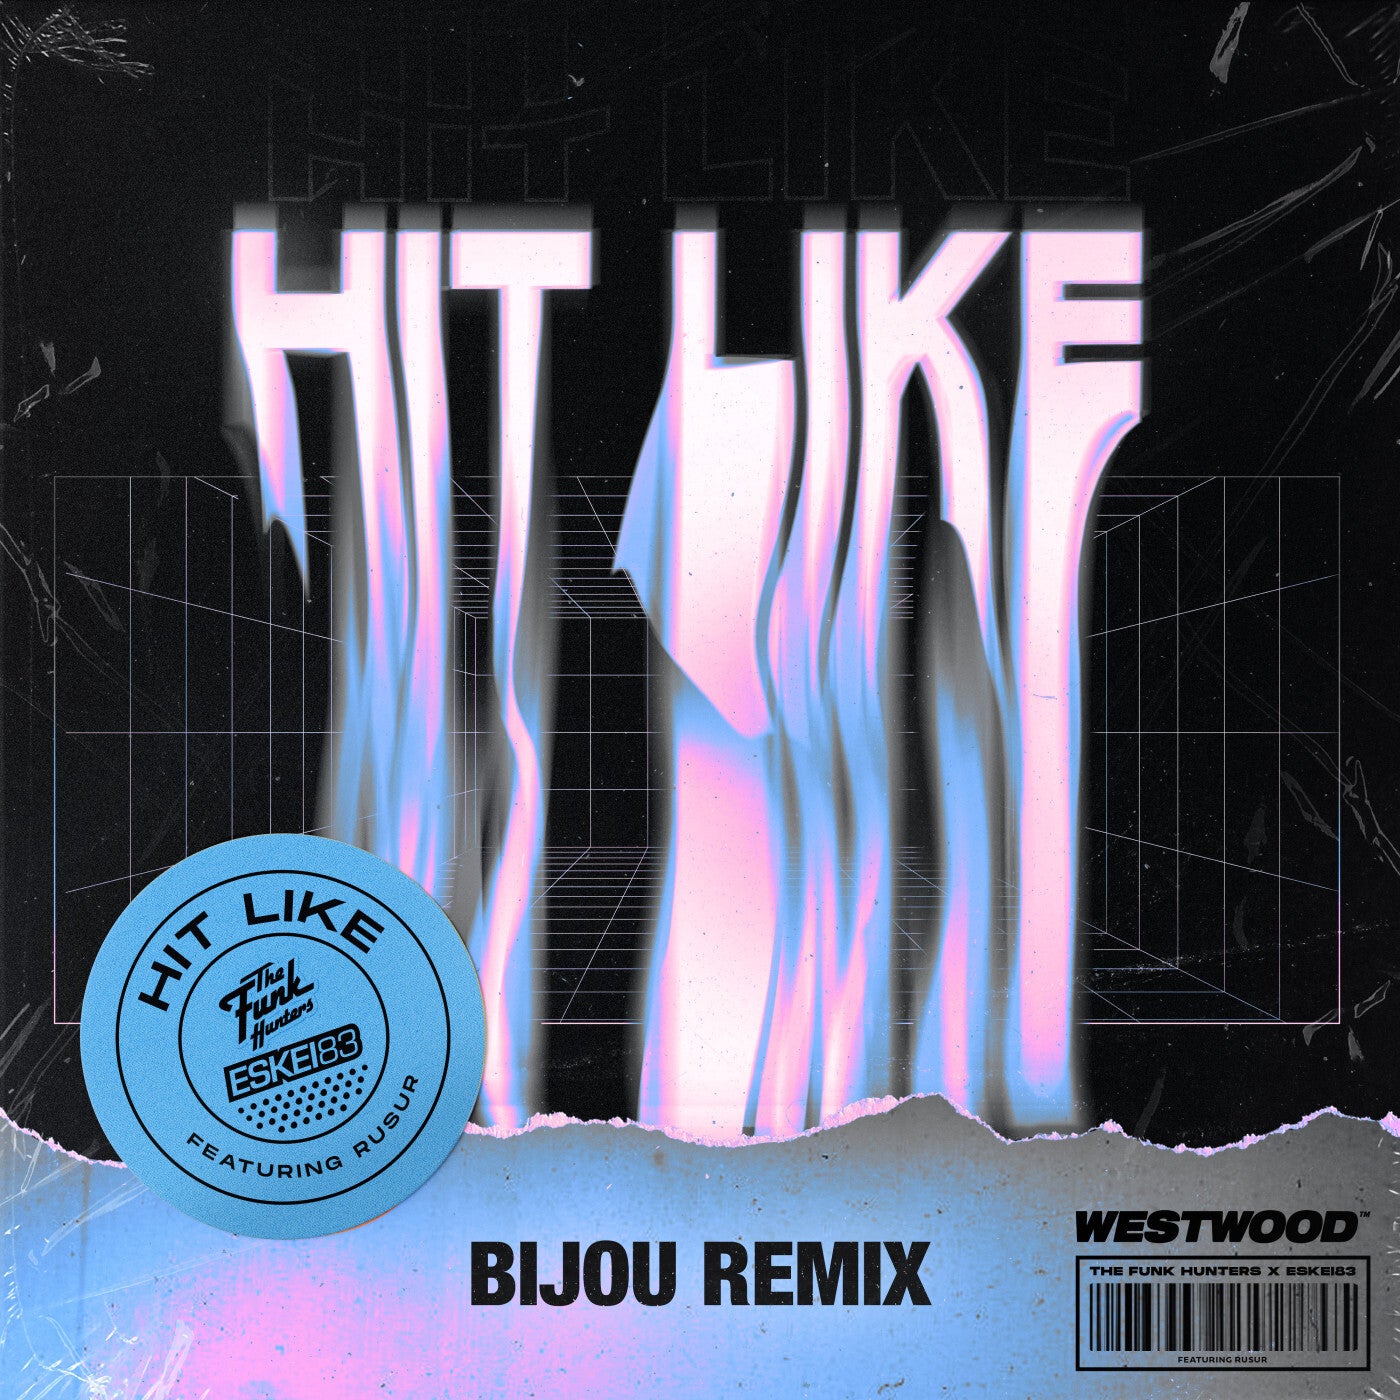 Hit Like (BIJOU Remix)